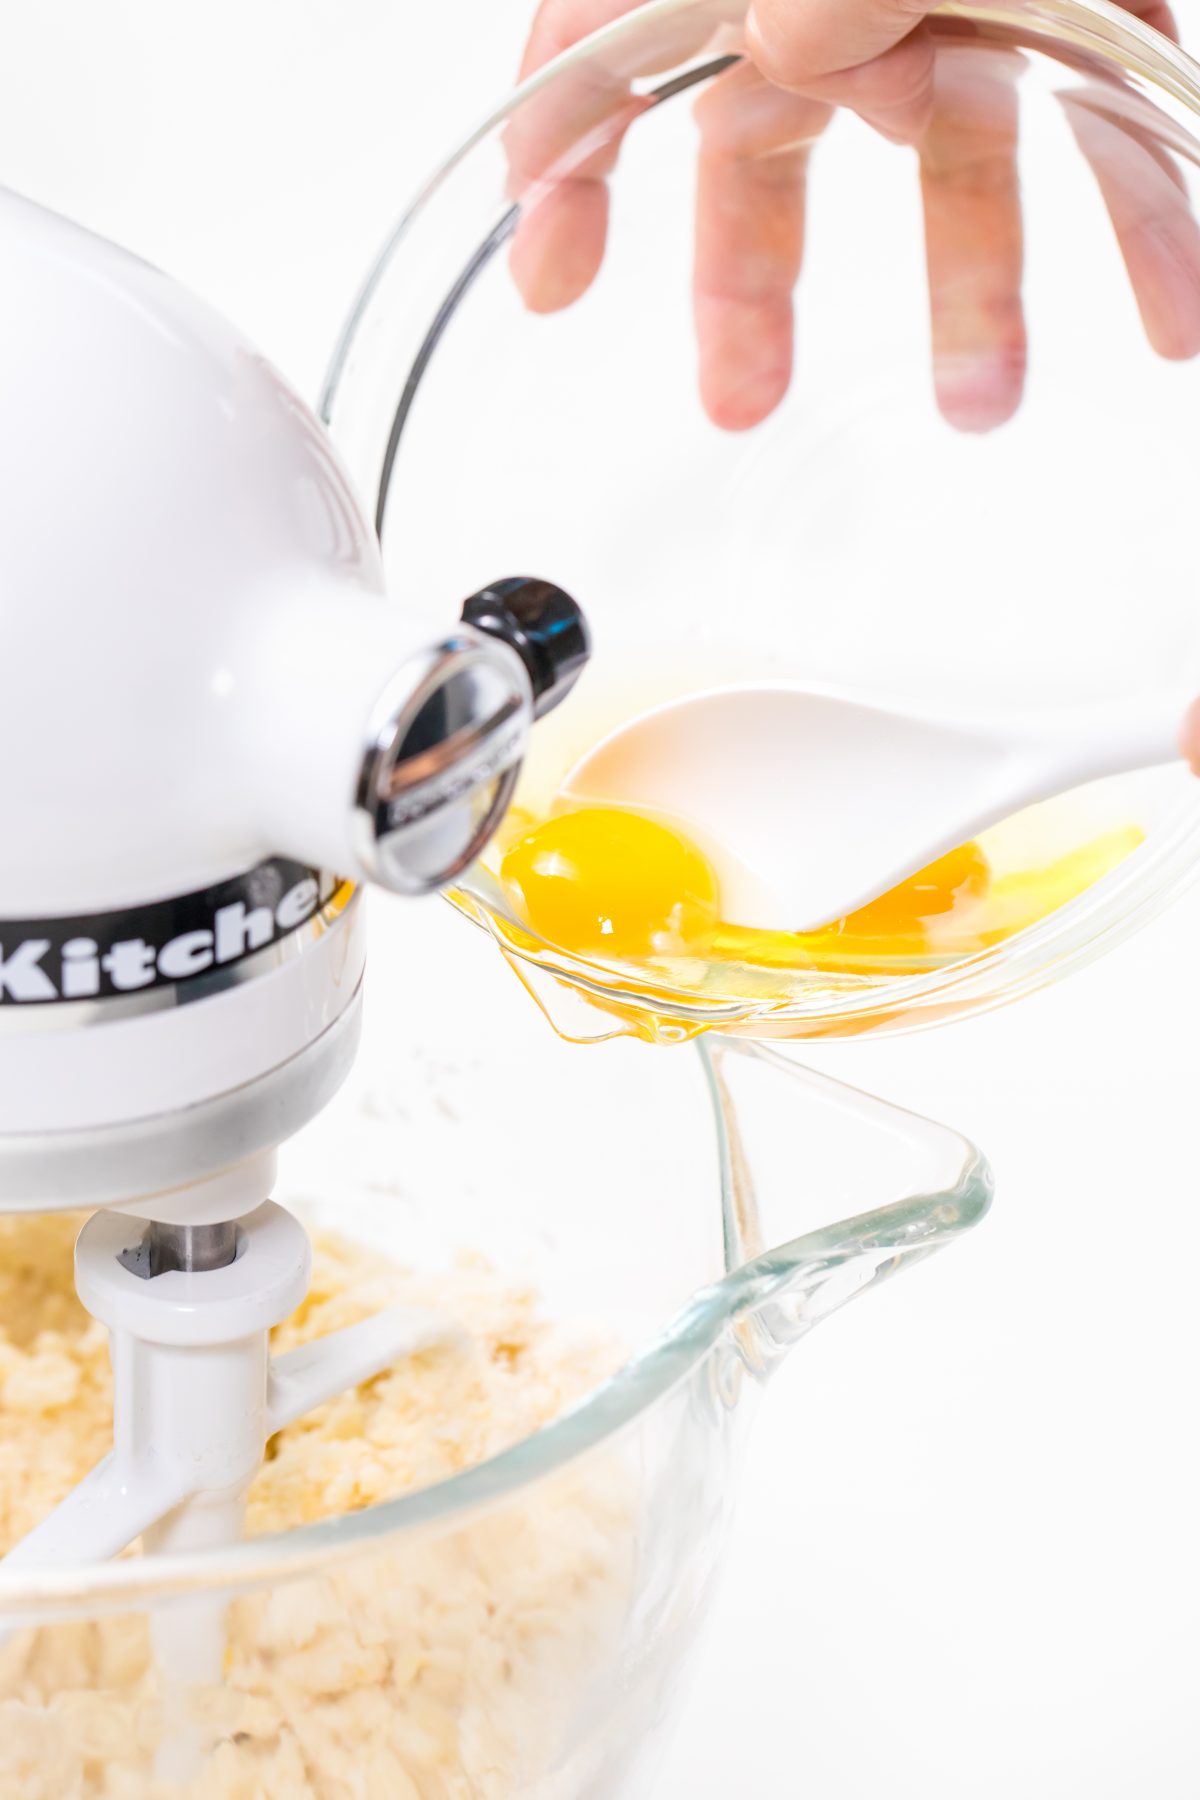 Pour whole eggs into mixing bowl